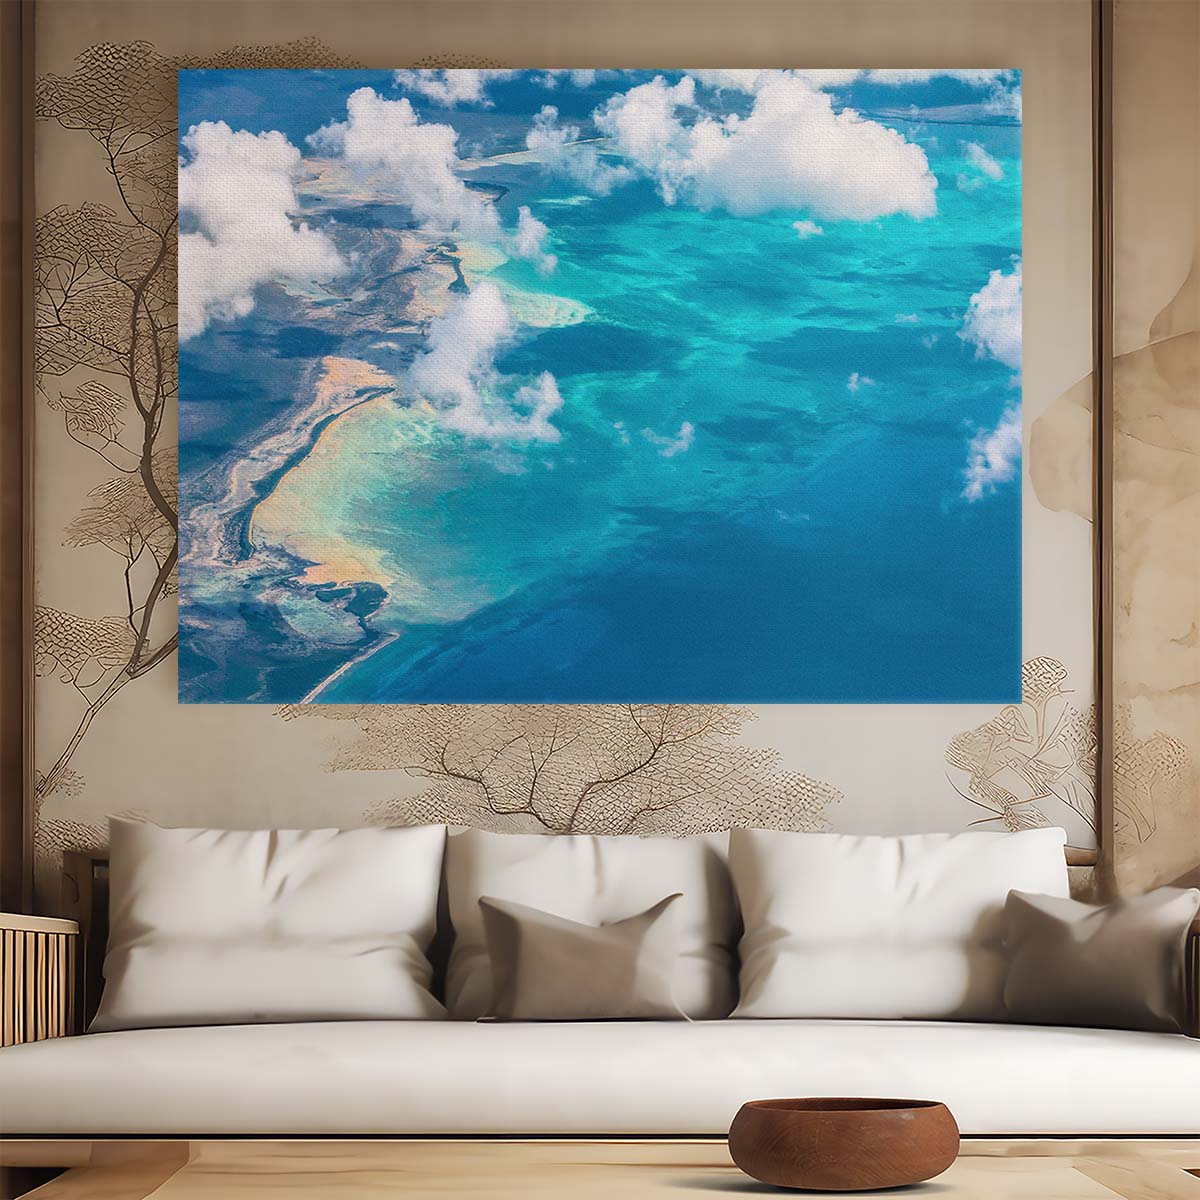 Caribbean Beach & Ocean Aerial View Wall Art by Luxuriance Designs. Made in USA.